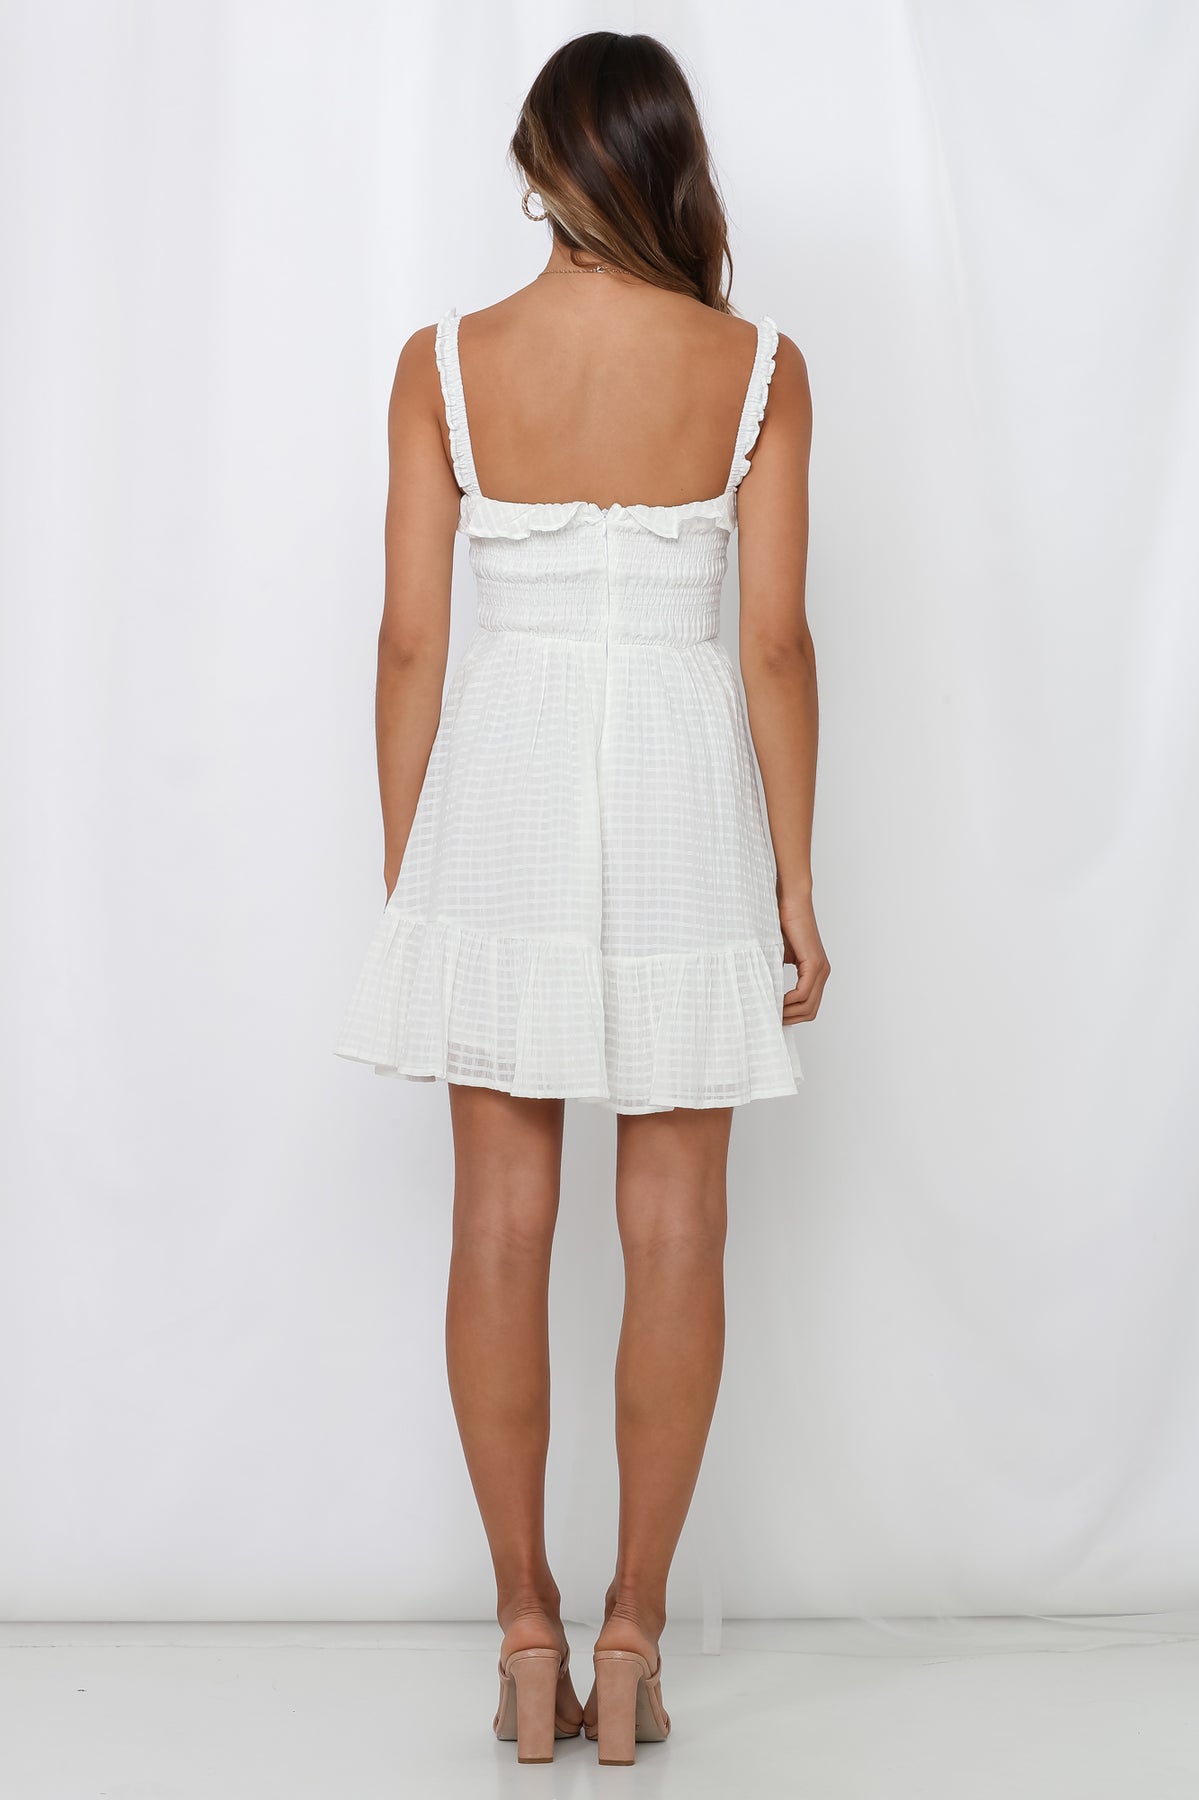 Shop Formal Dress - Speed Dating Dress White sixth image